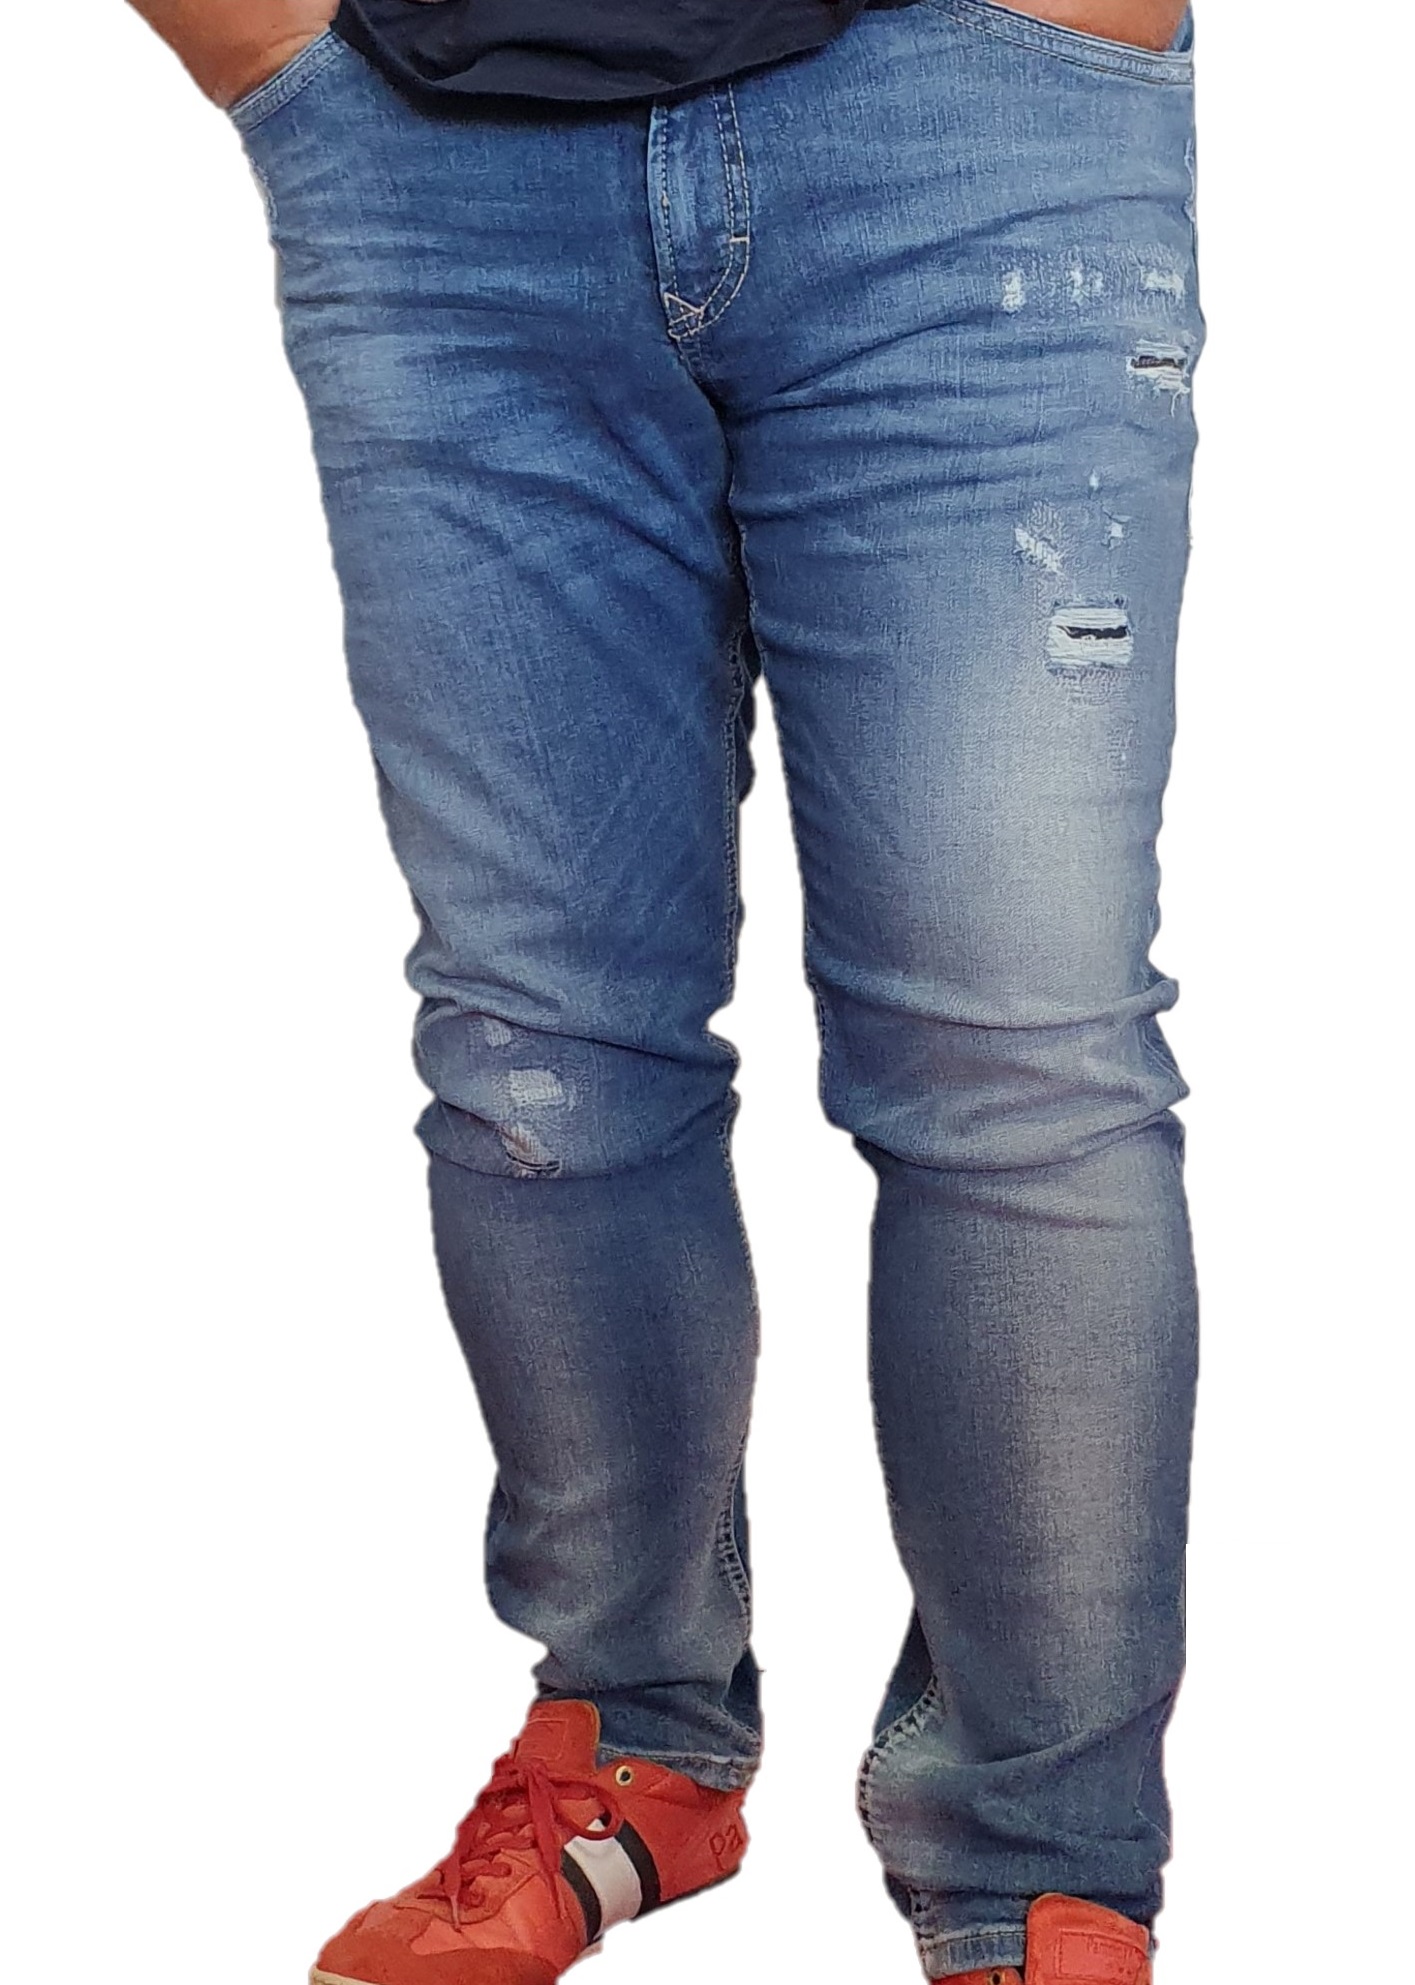 MAC Herren-Jeans, Arne Pipe, Drivers Jeans, kernige authentische 5-Pocket  Jeans | GioMilano